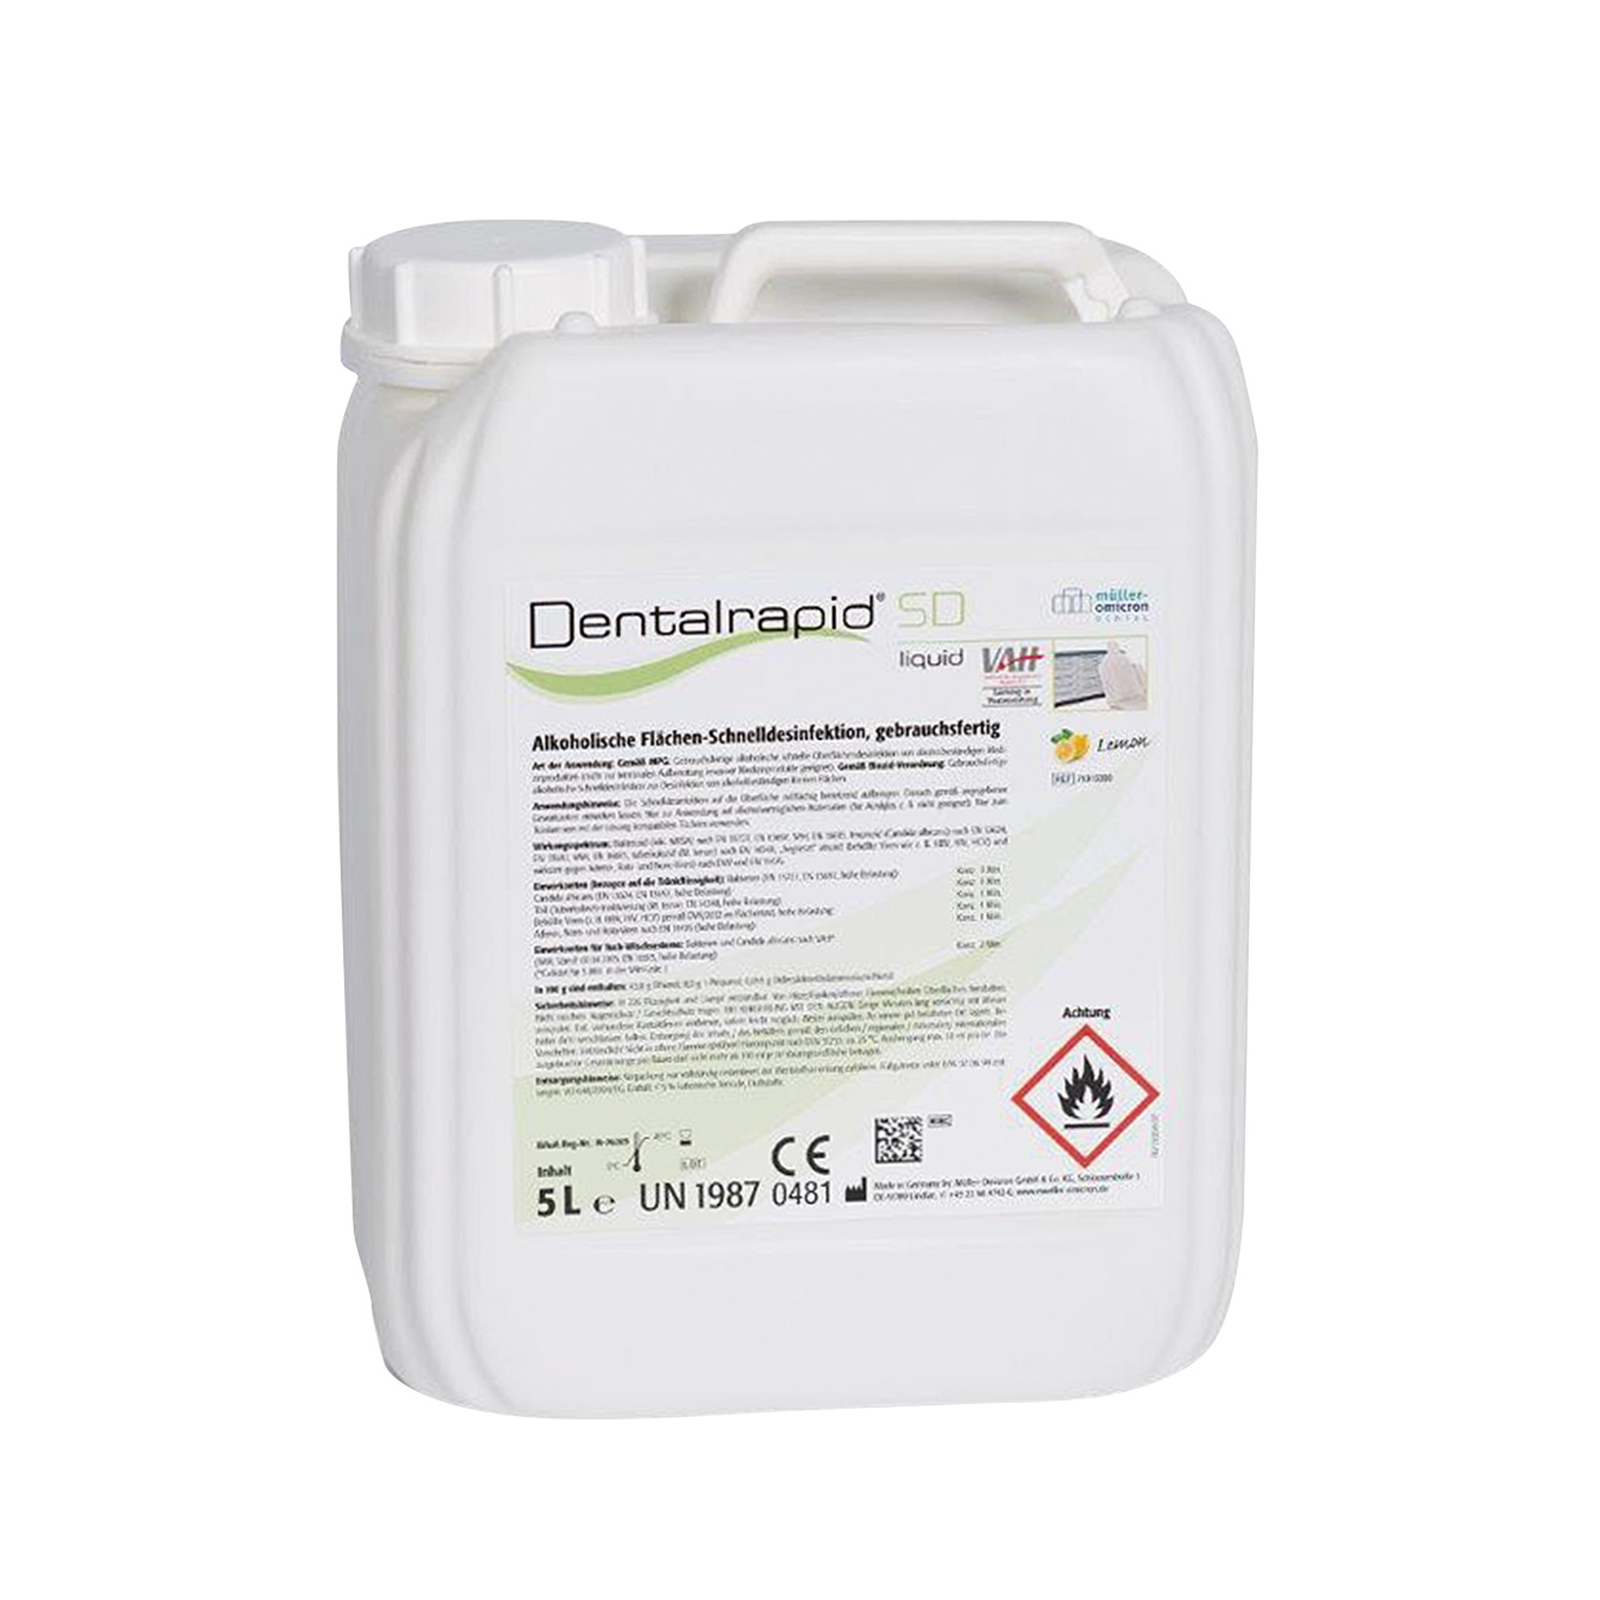 Dentalrapid SD liquid Surface Disinfectant, flower - 5000 ml